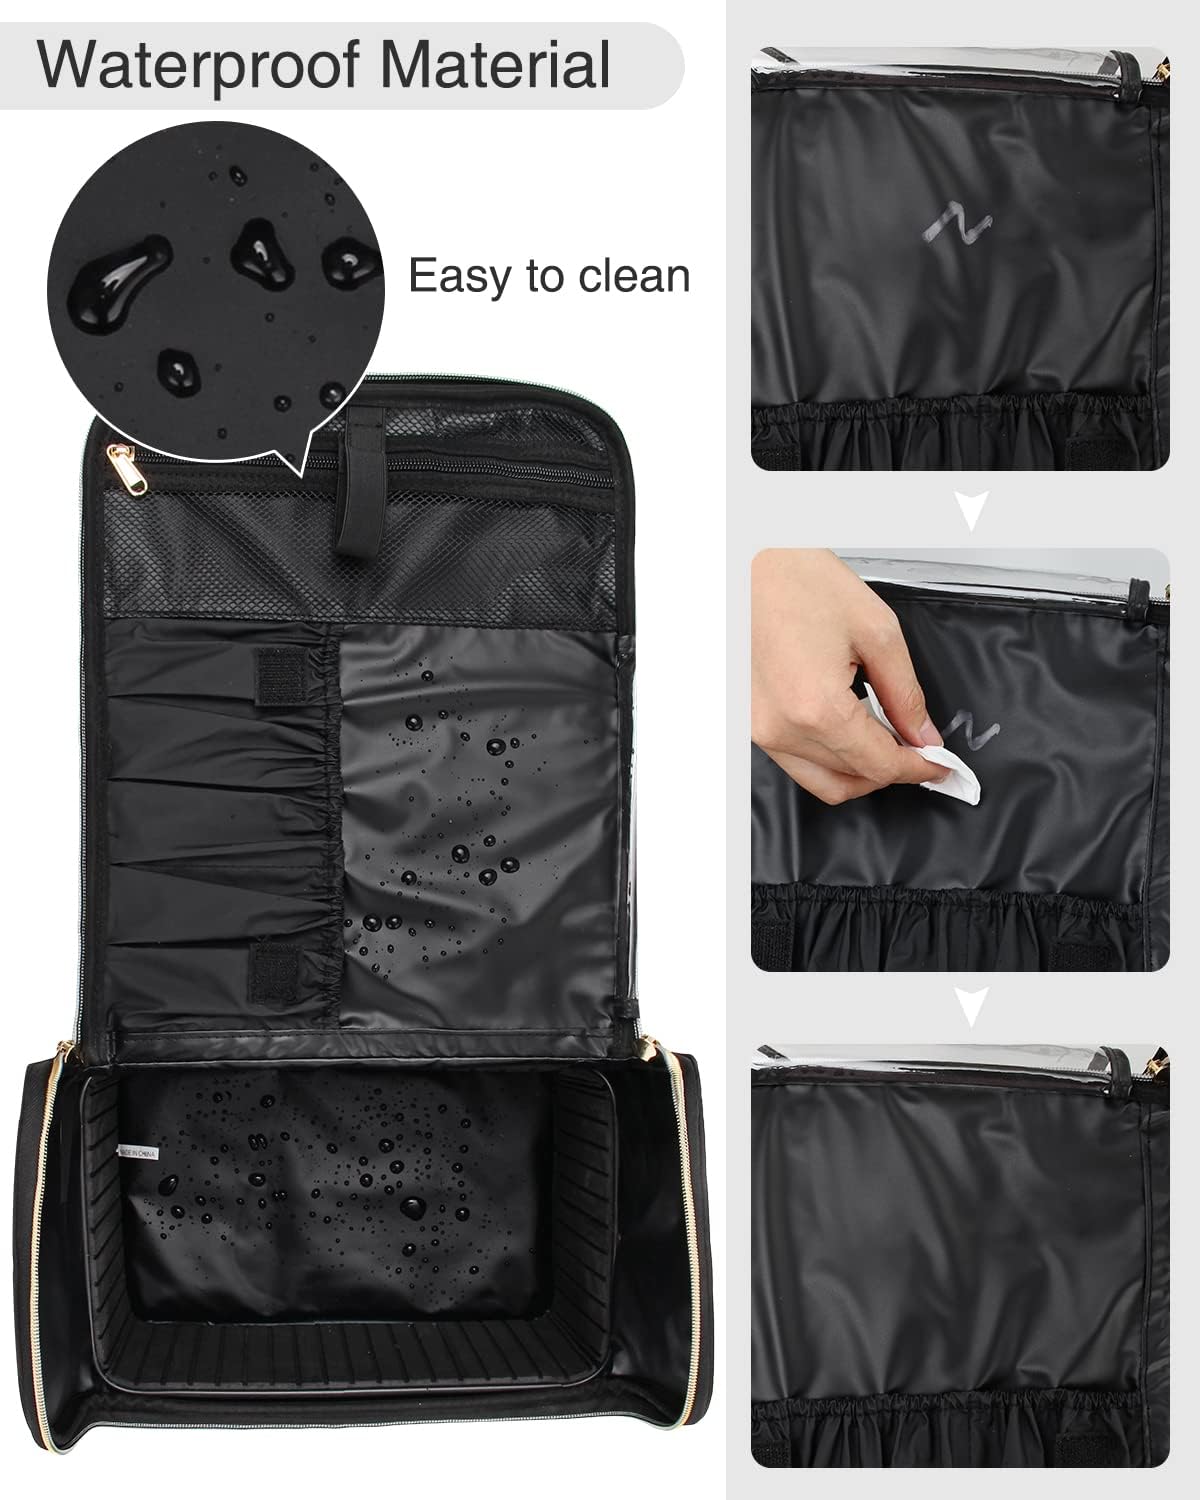 Professional Large Travel Makeup Bag with 4 Clear Bag and Adjustable Dividers and Shoulder Strap